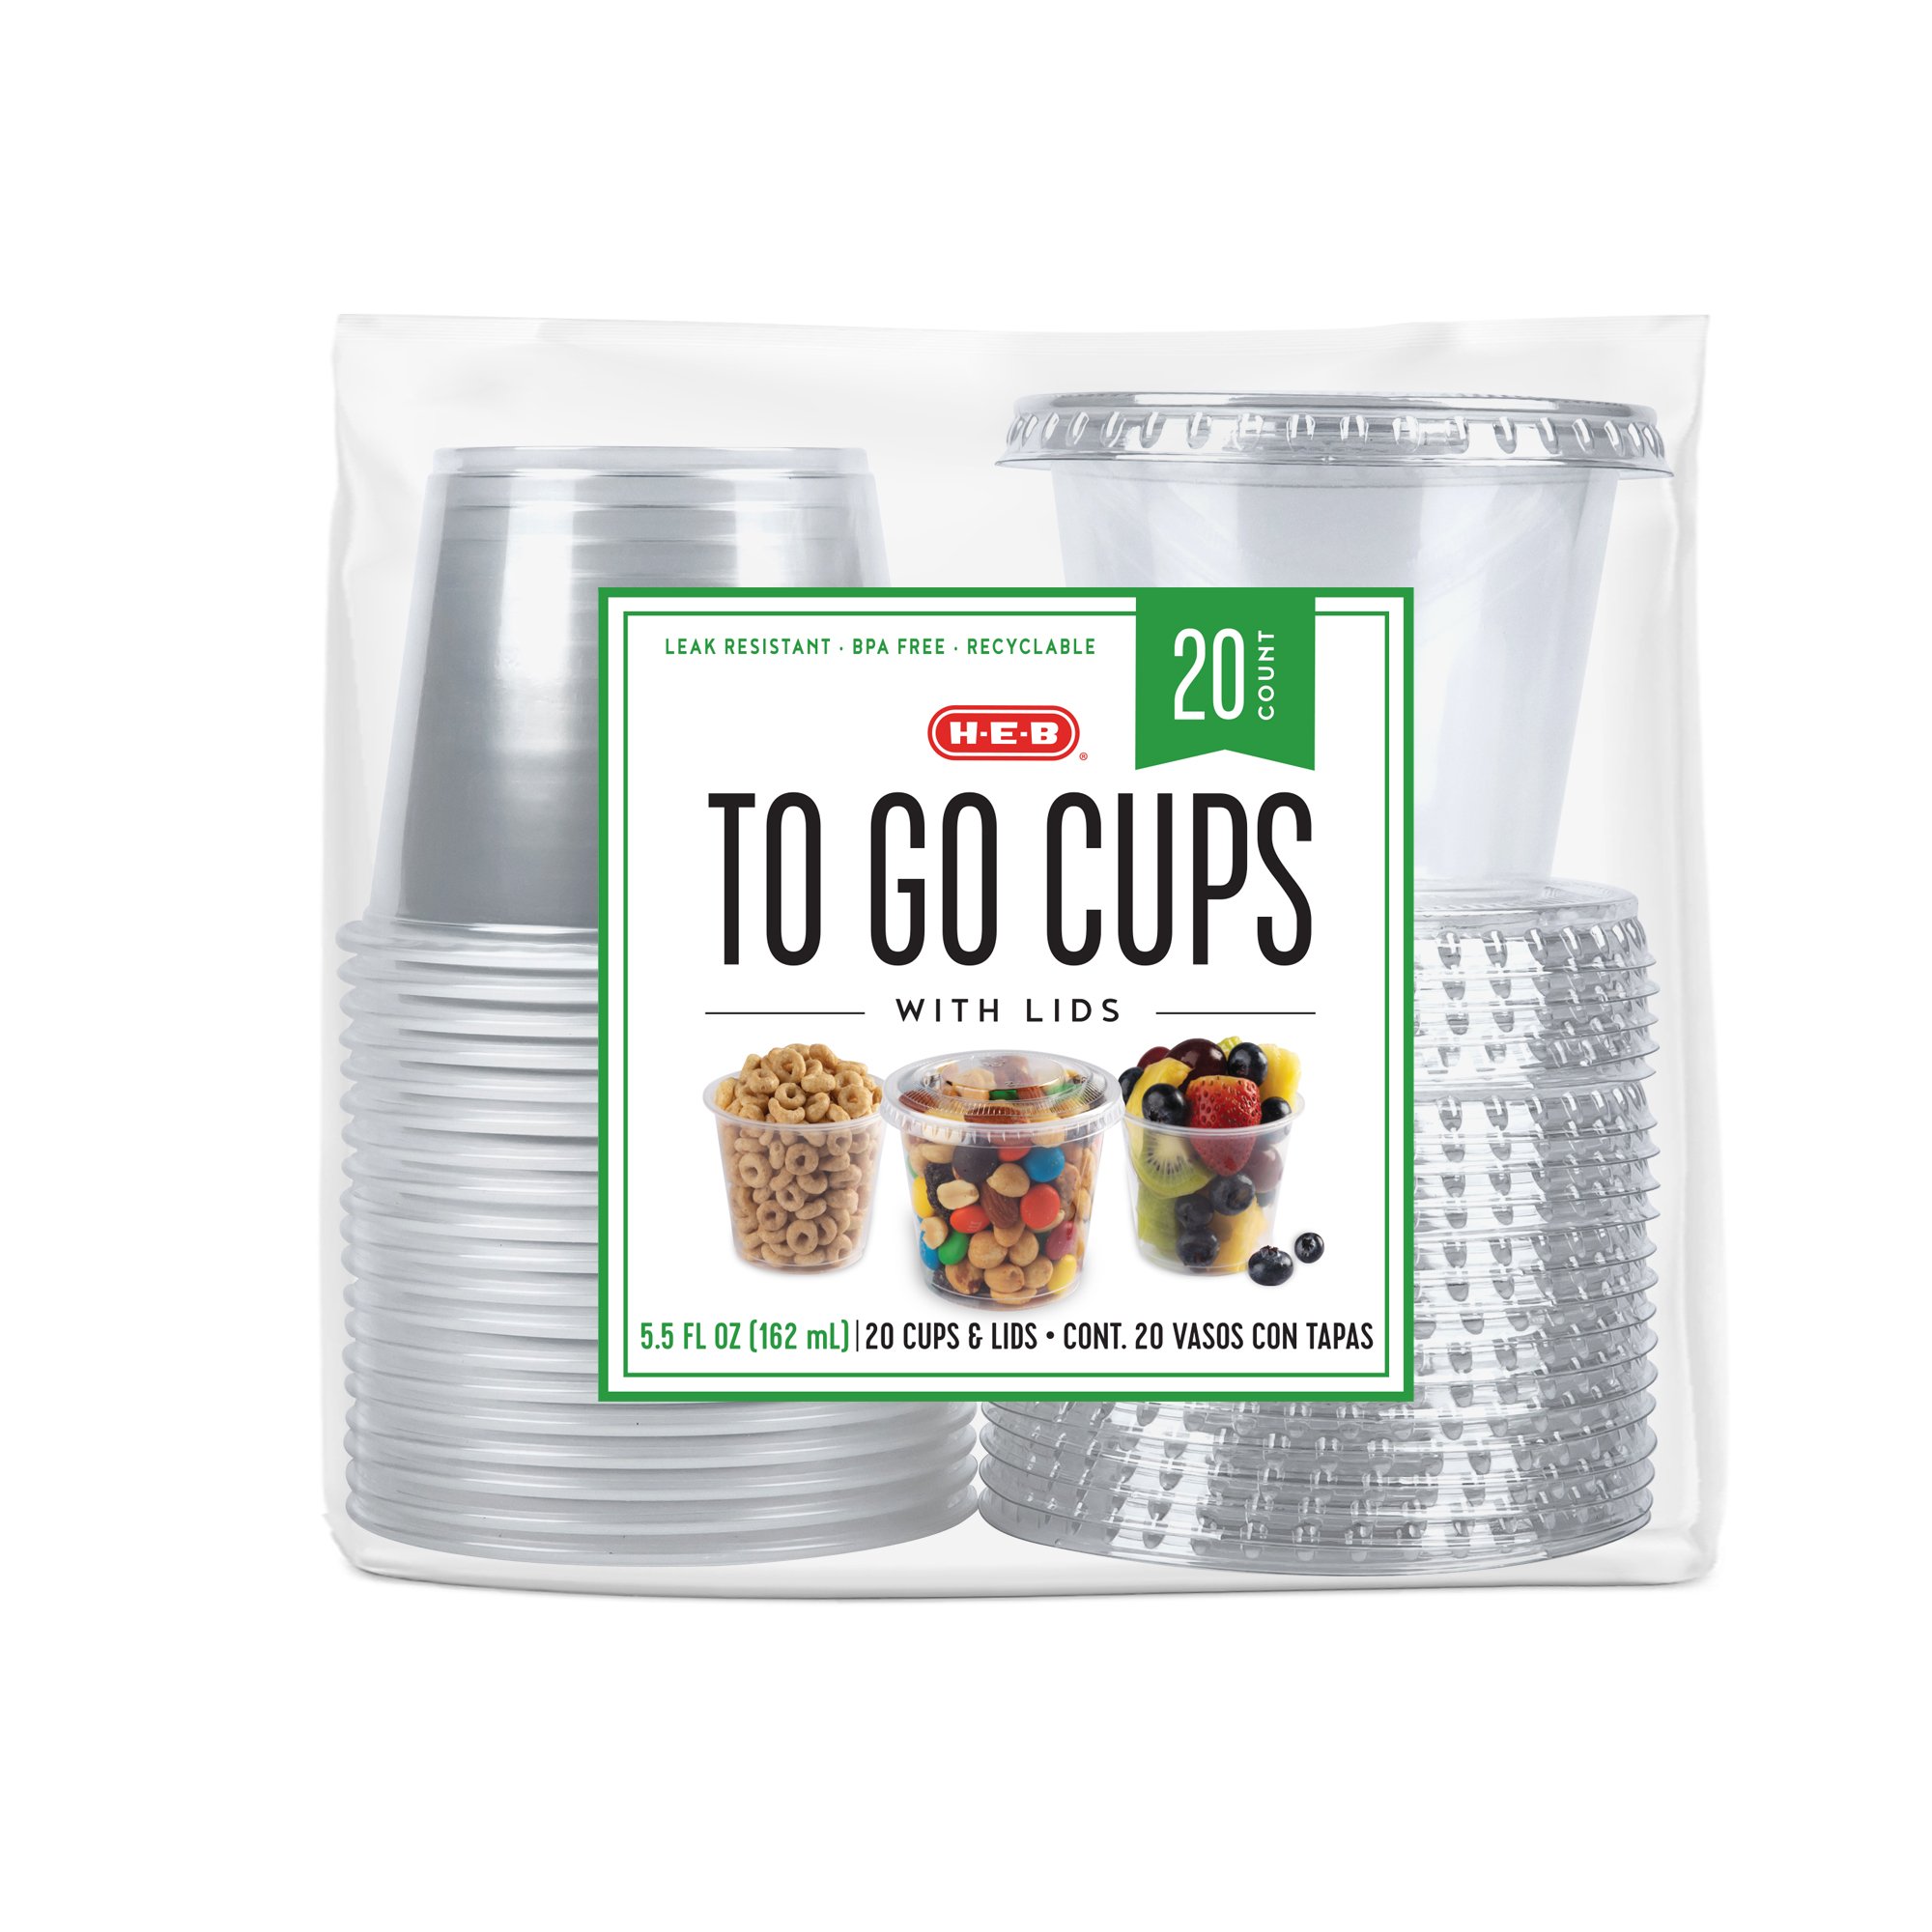 H-E-B 9 oz Clear Plastic Cups - Shop Drinkware at H-E-B